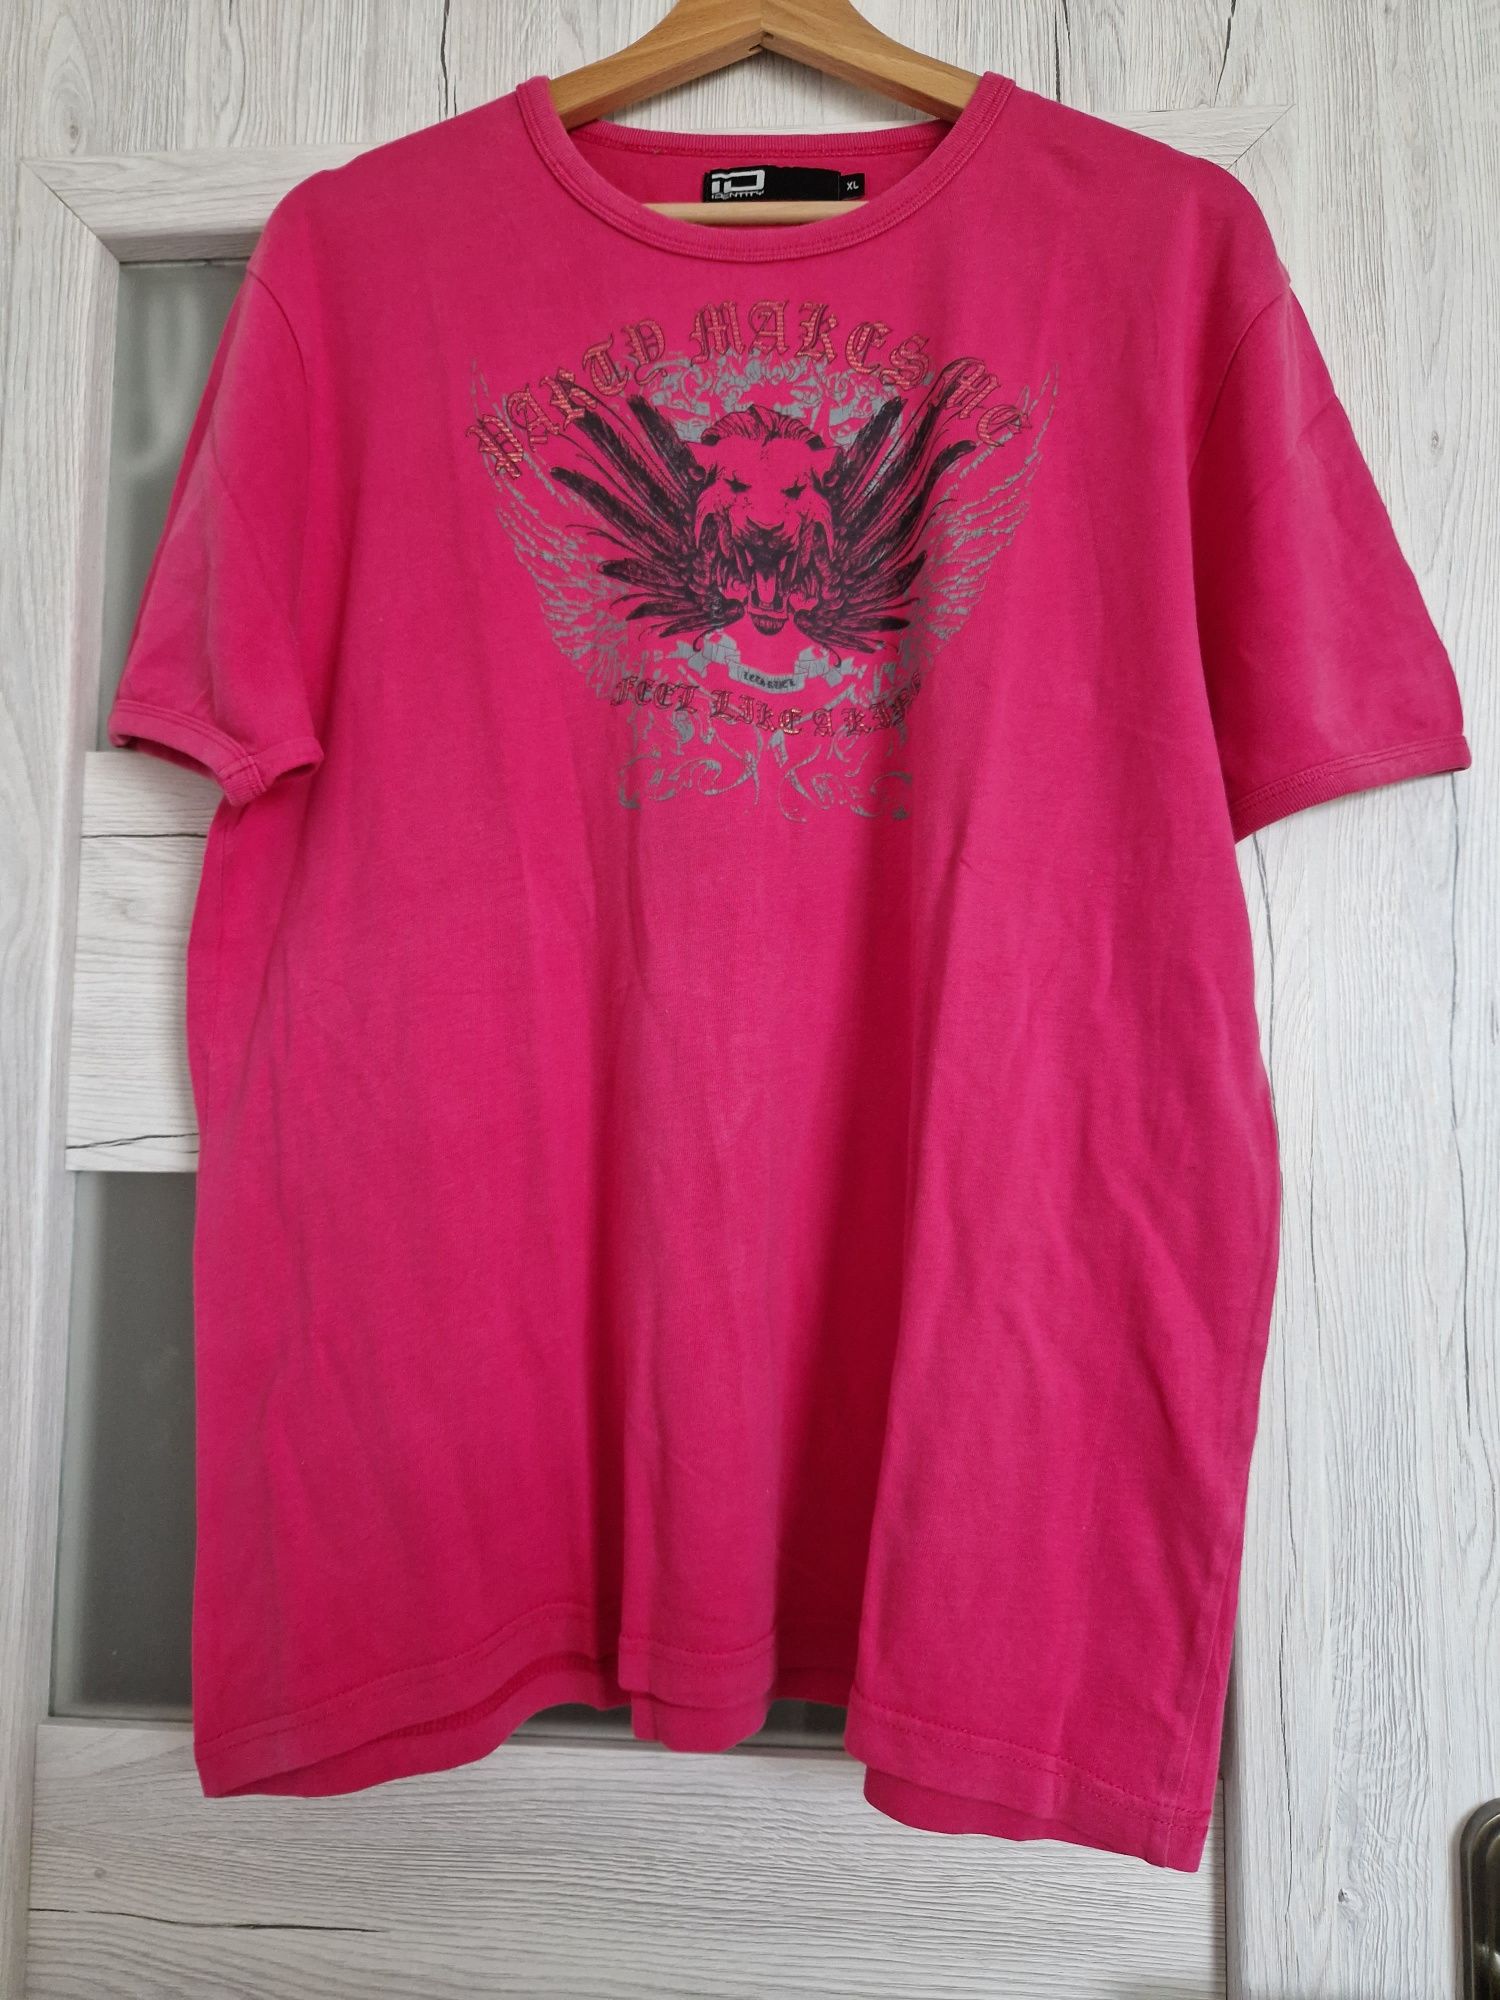 Koszulka męska bluzka z krótkim rękawem T-shirt różowa róż